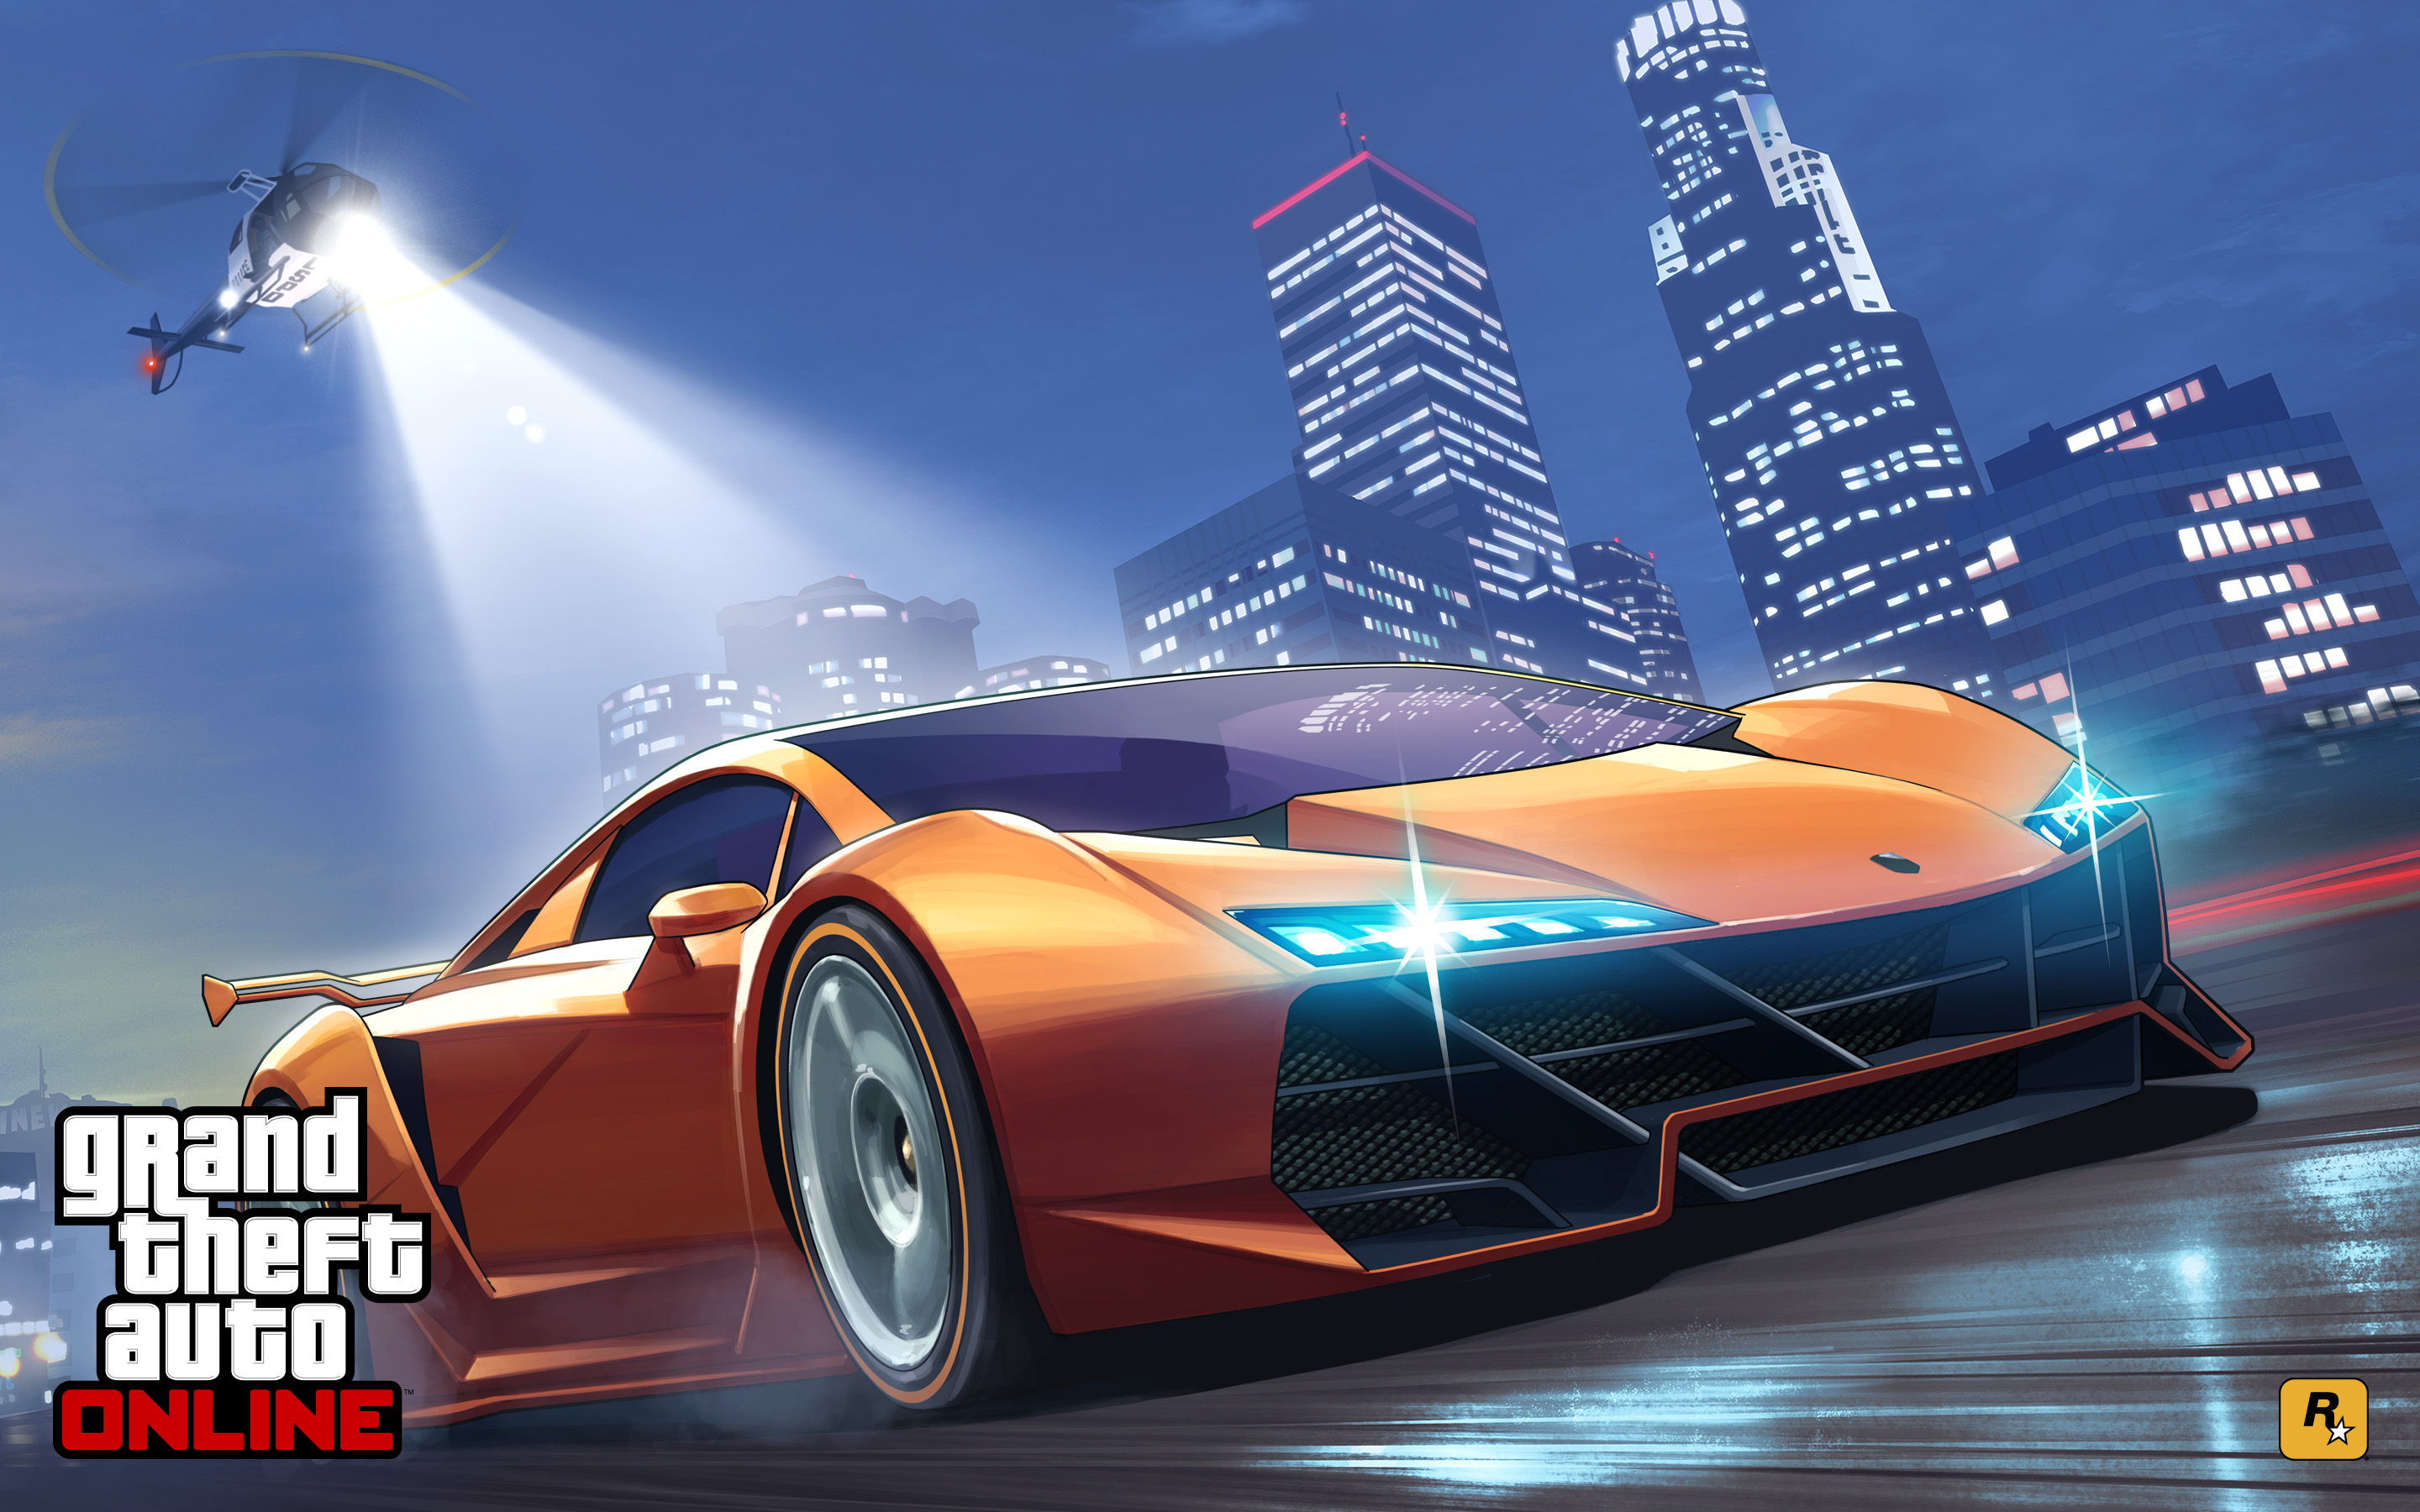 grand theft auto, video game, grand theft auto v